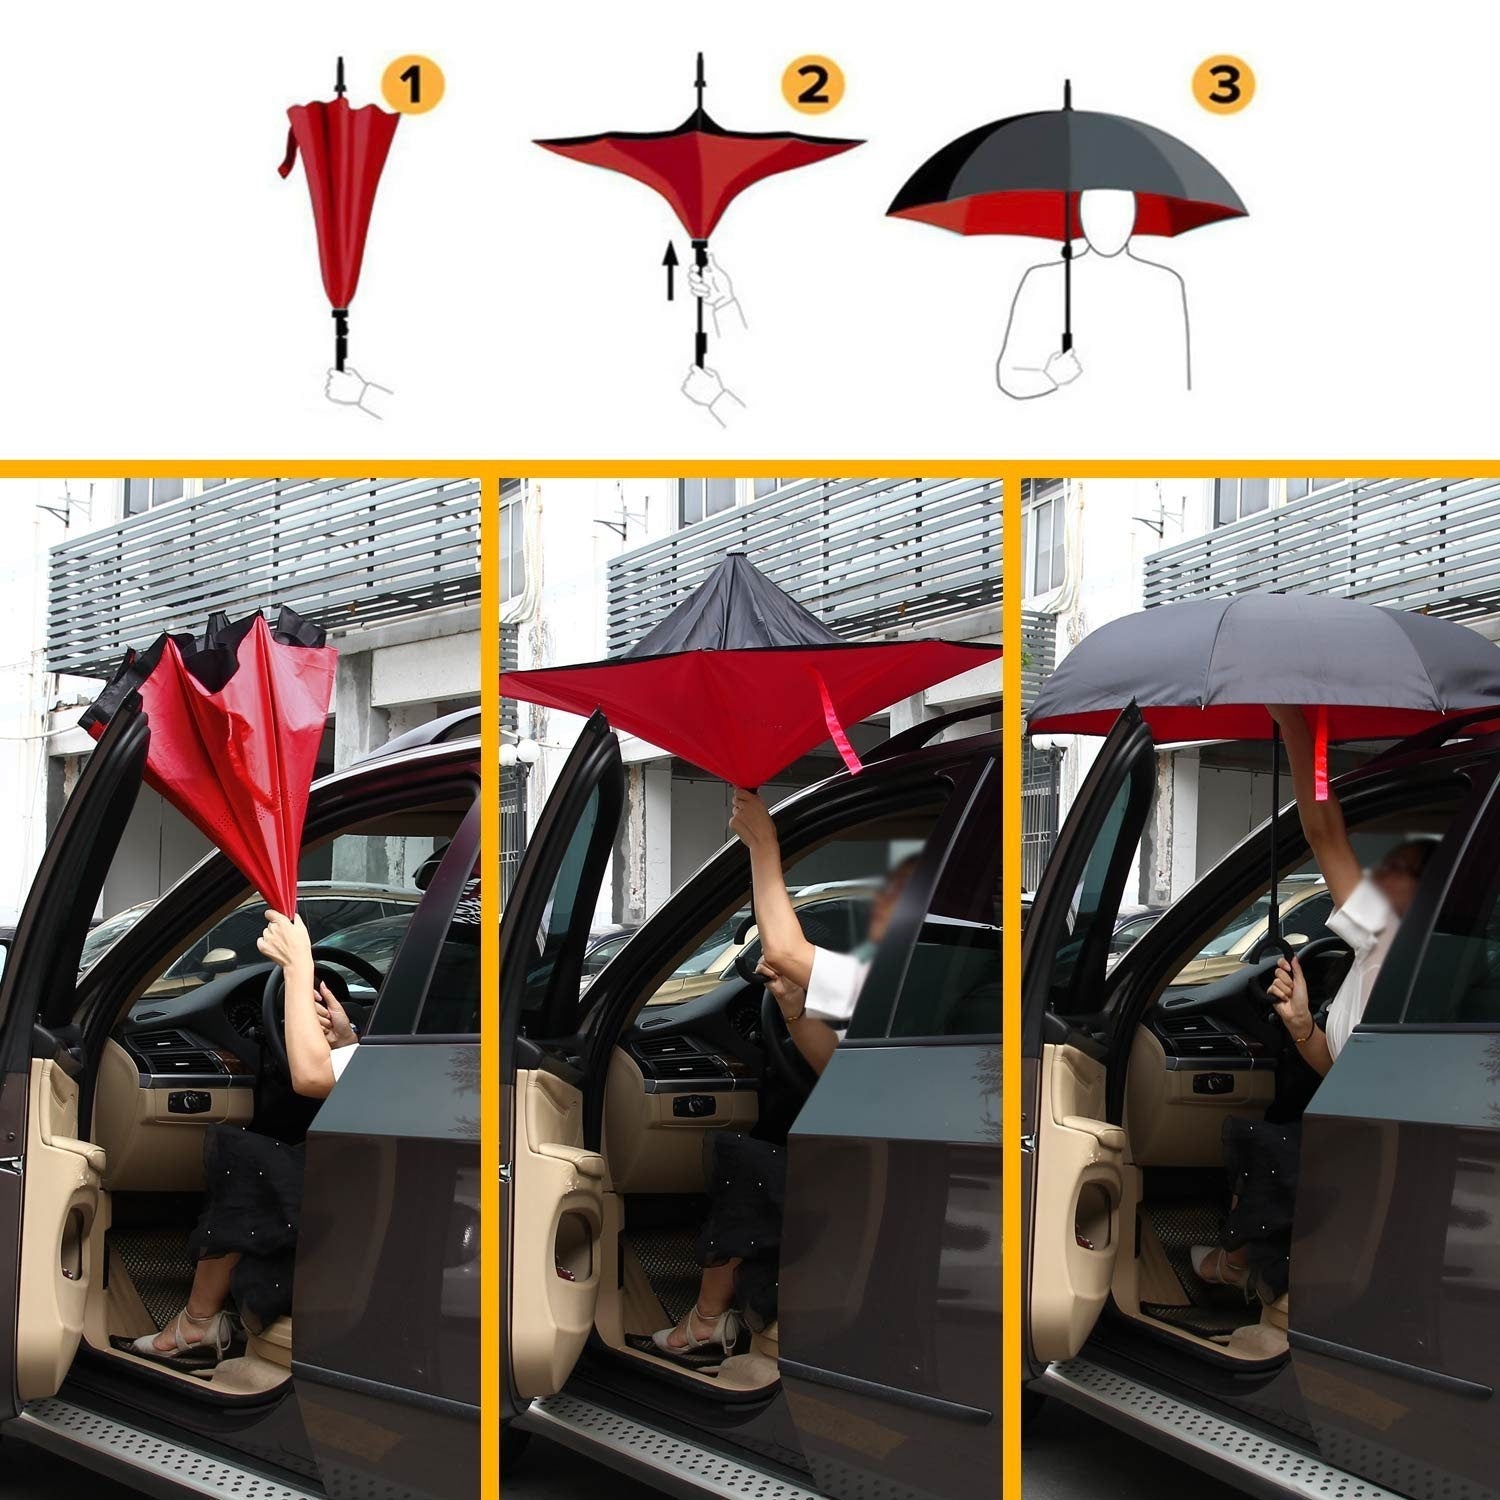 Inverted Umbrella Umbrella Windproof Reverse Umbrella, Umbrellas for Women with UV Protection, Upside Down Umbrella with C-Handle  P16